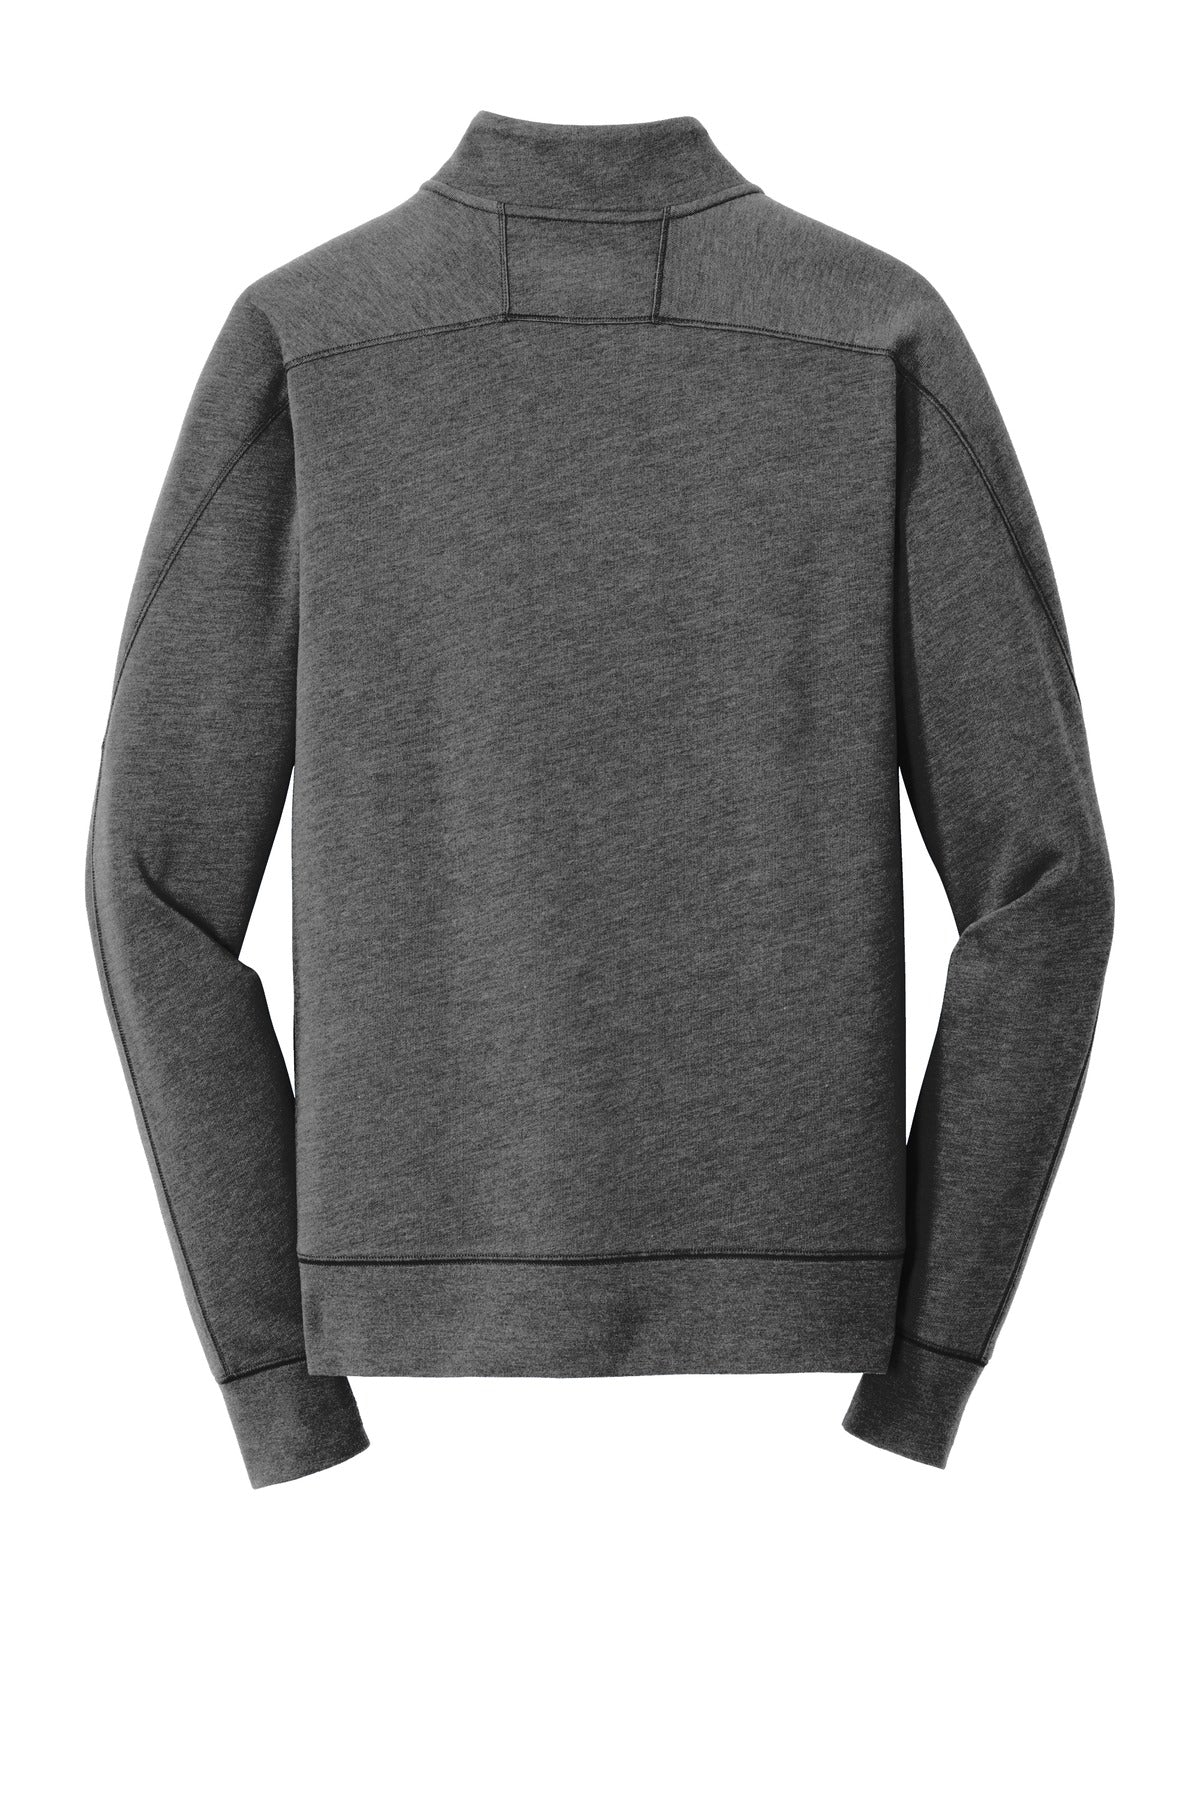 New Era Tri-Blend Fleece 1/4-Zip Pullover. NEA512